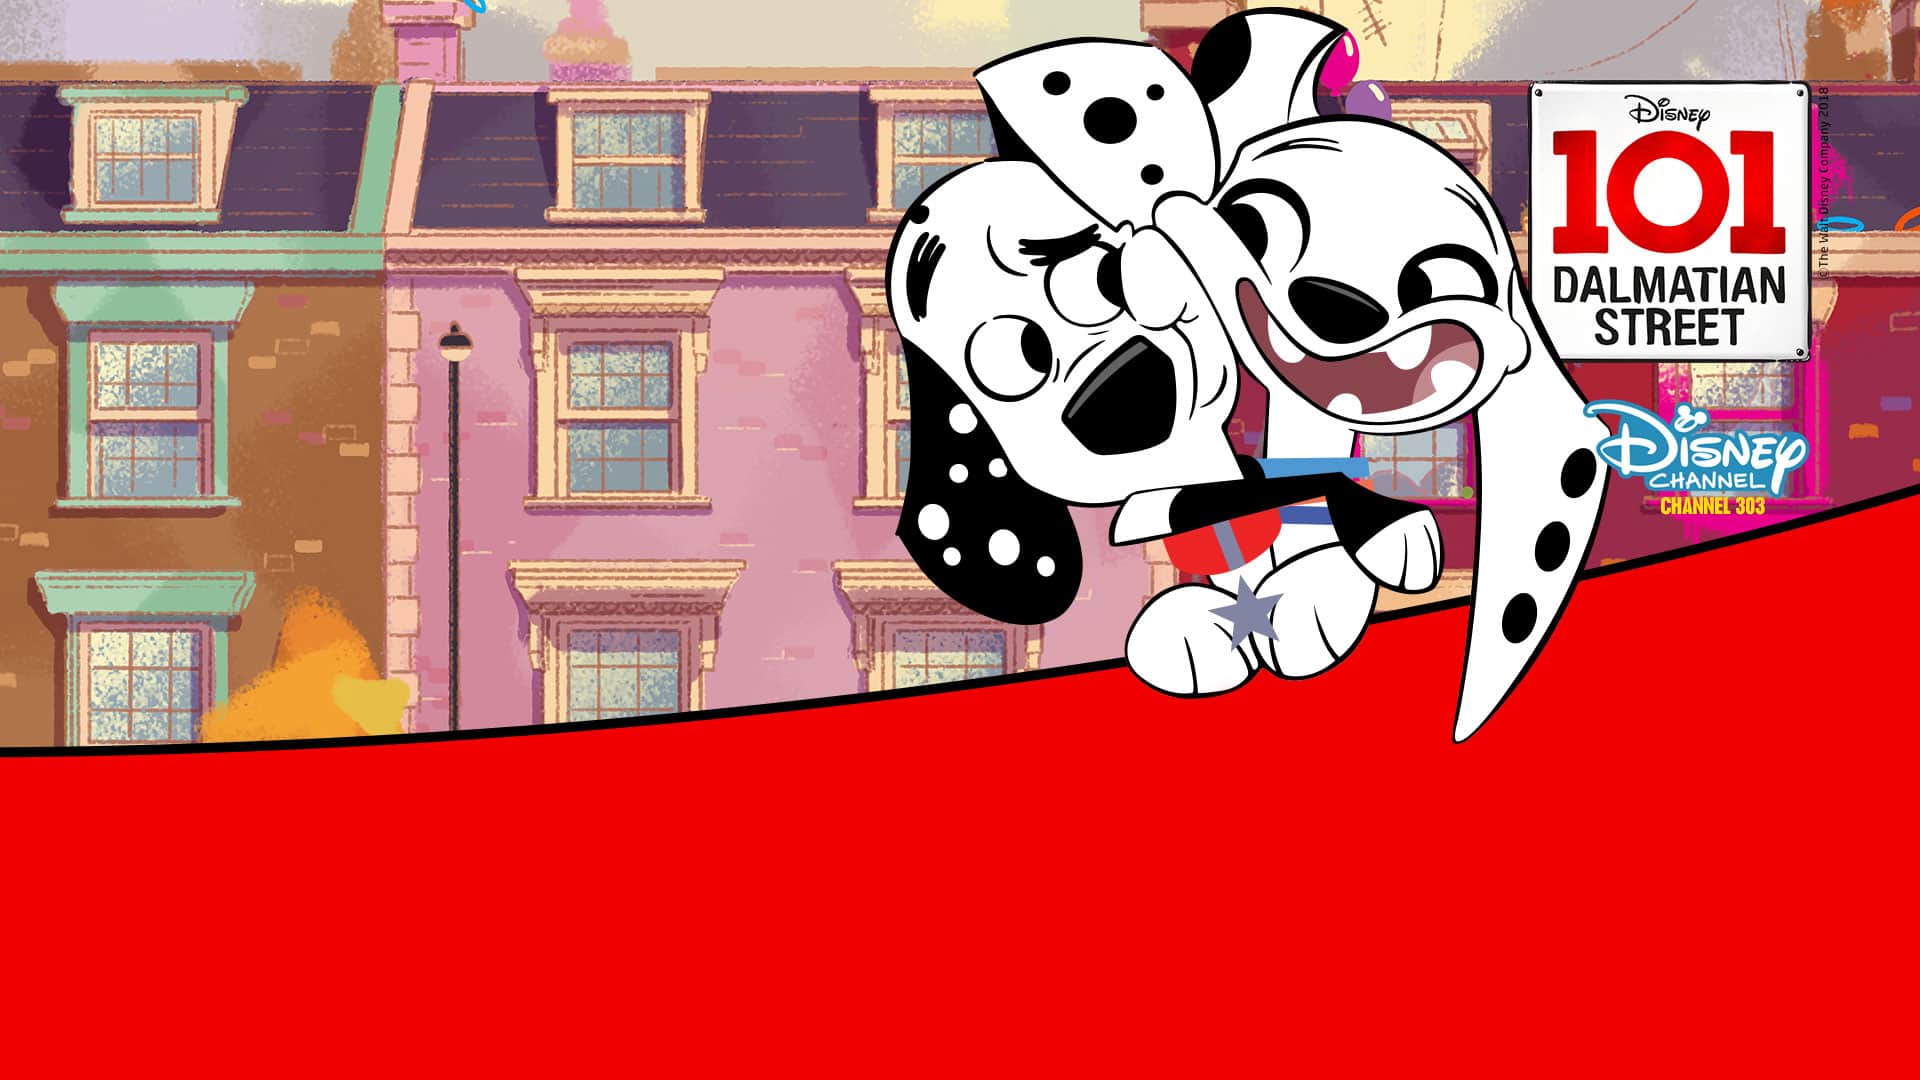 Brand new Disney Channel Animation 101 Dalmatian Street